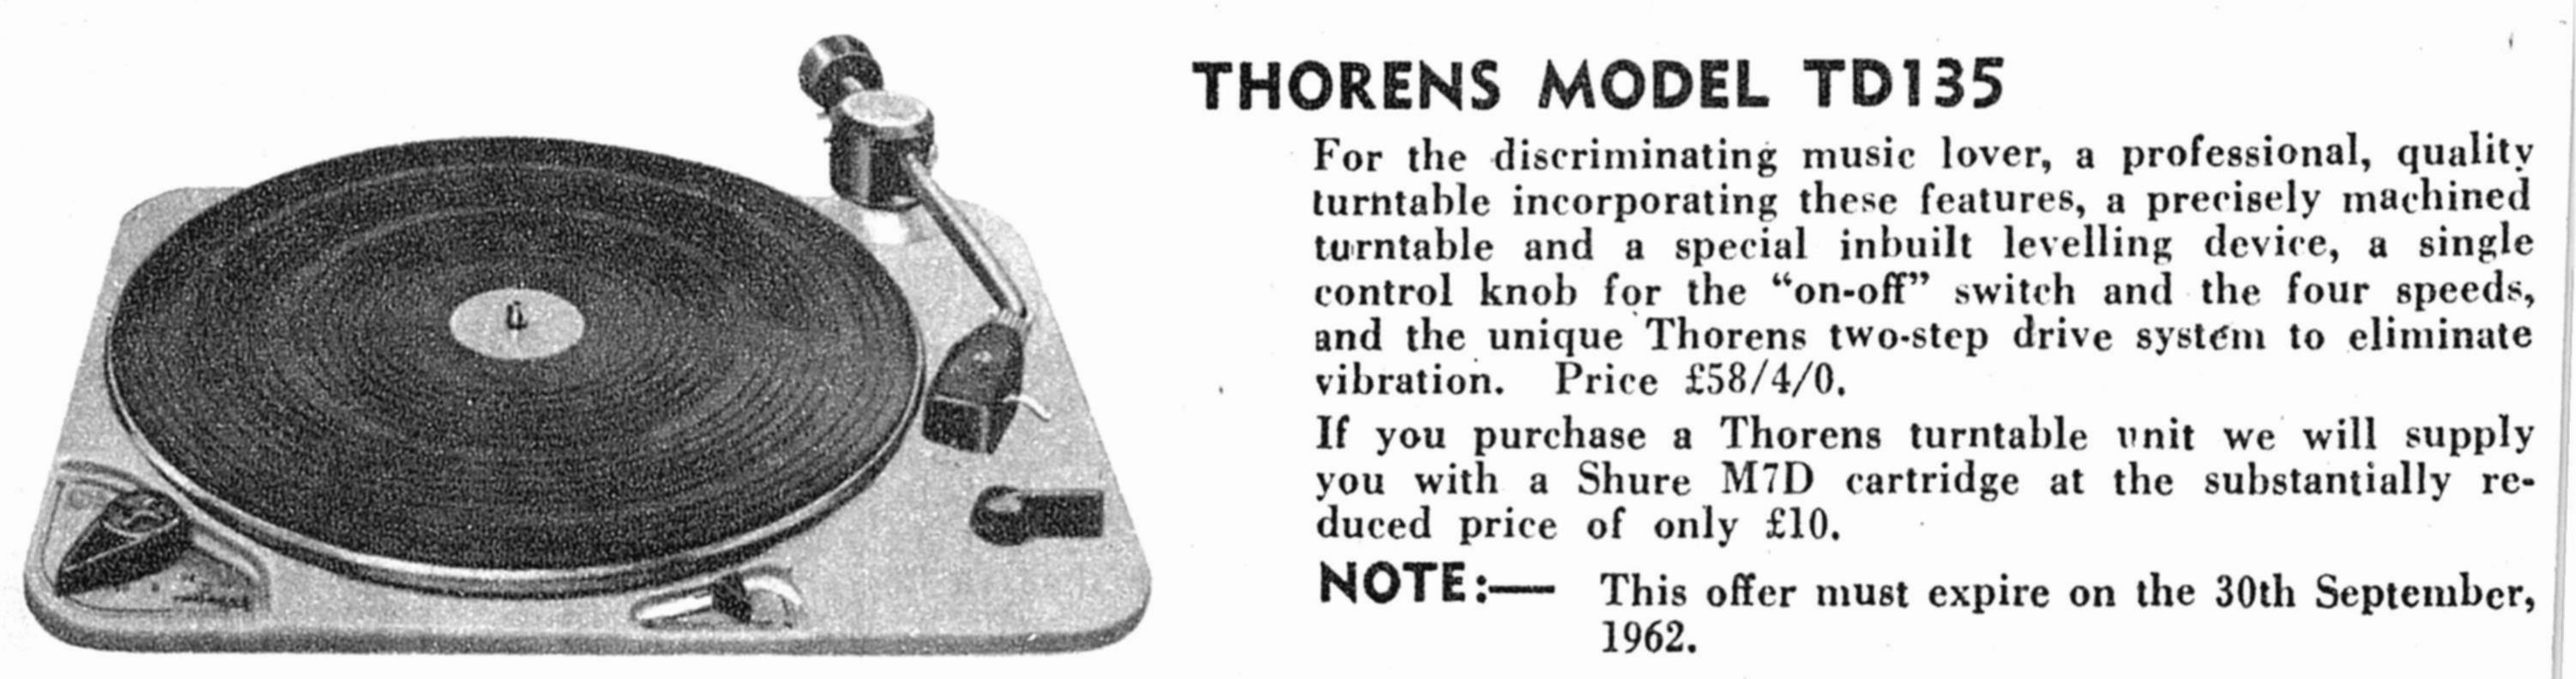 Thorens 1962 20.jpg